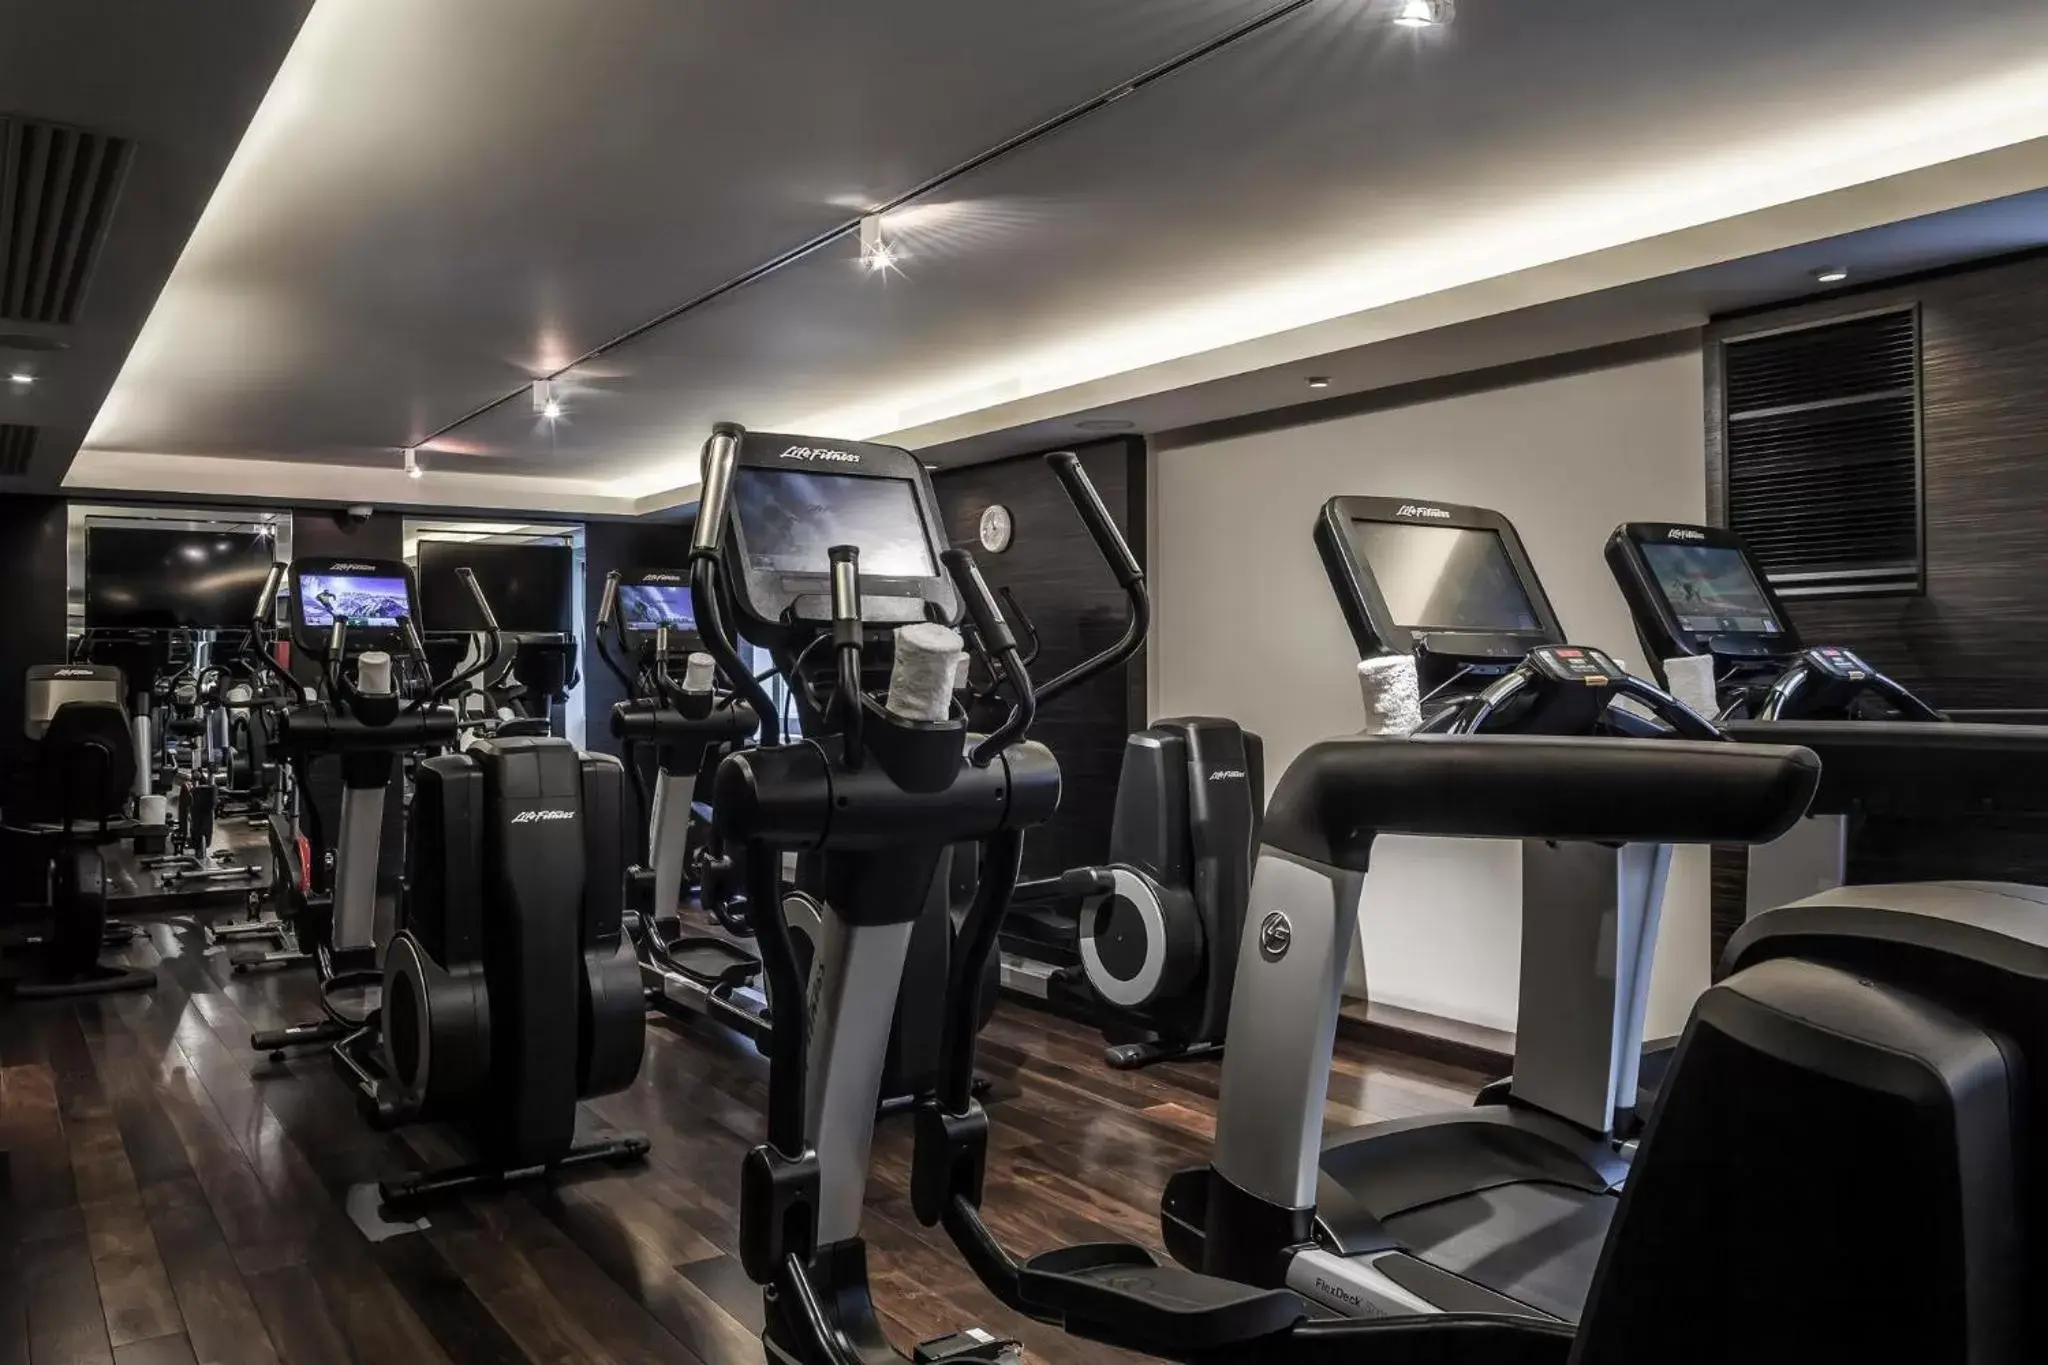 Fitness centre/facilities, Fitness Center/Facilities in InterContinental London Park Lane, an IHG Hotel